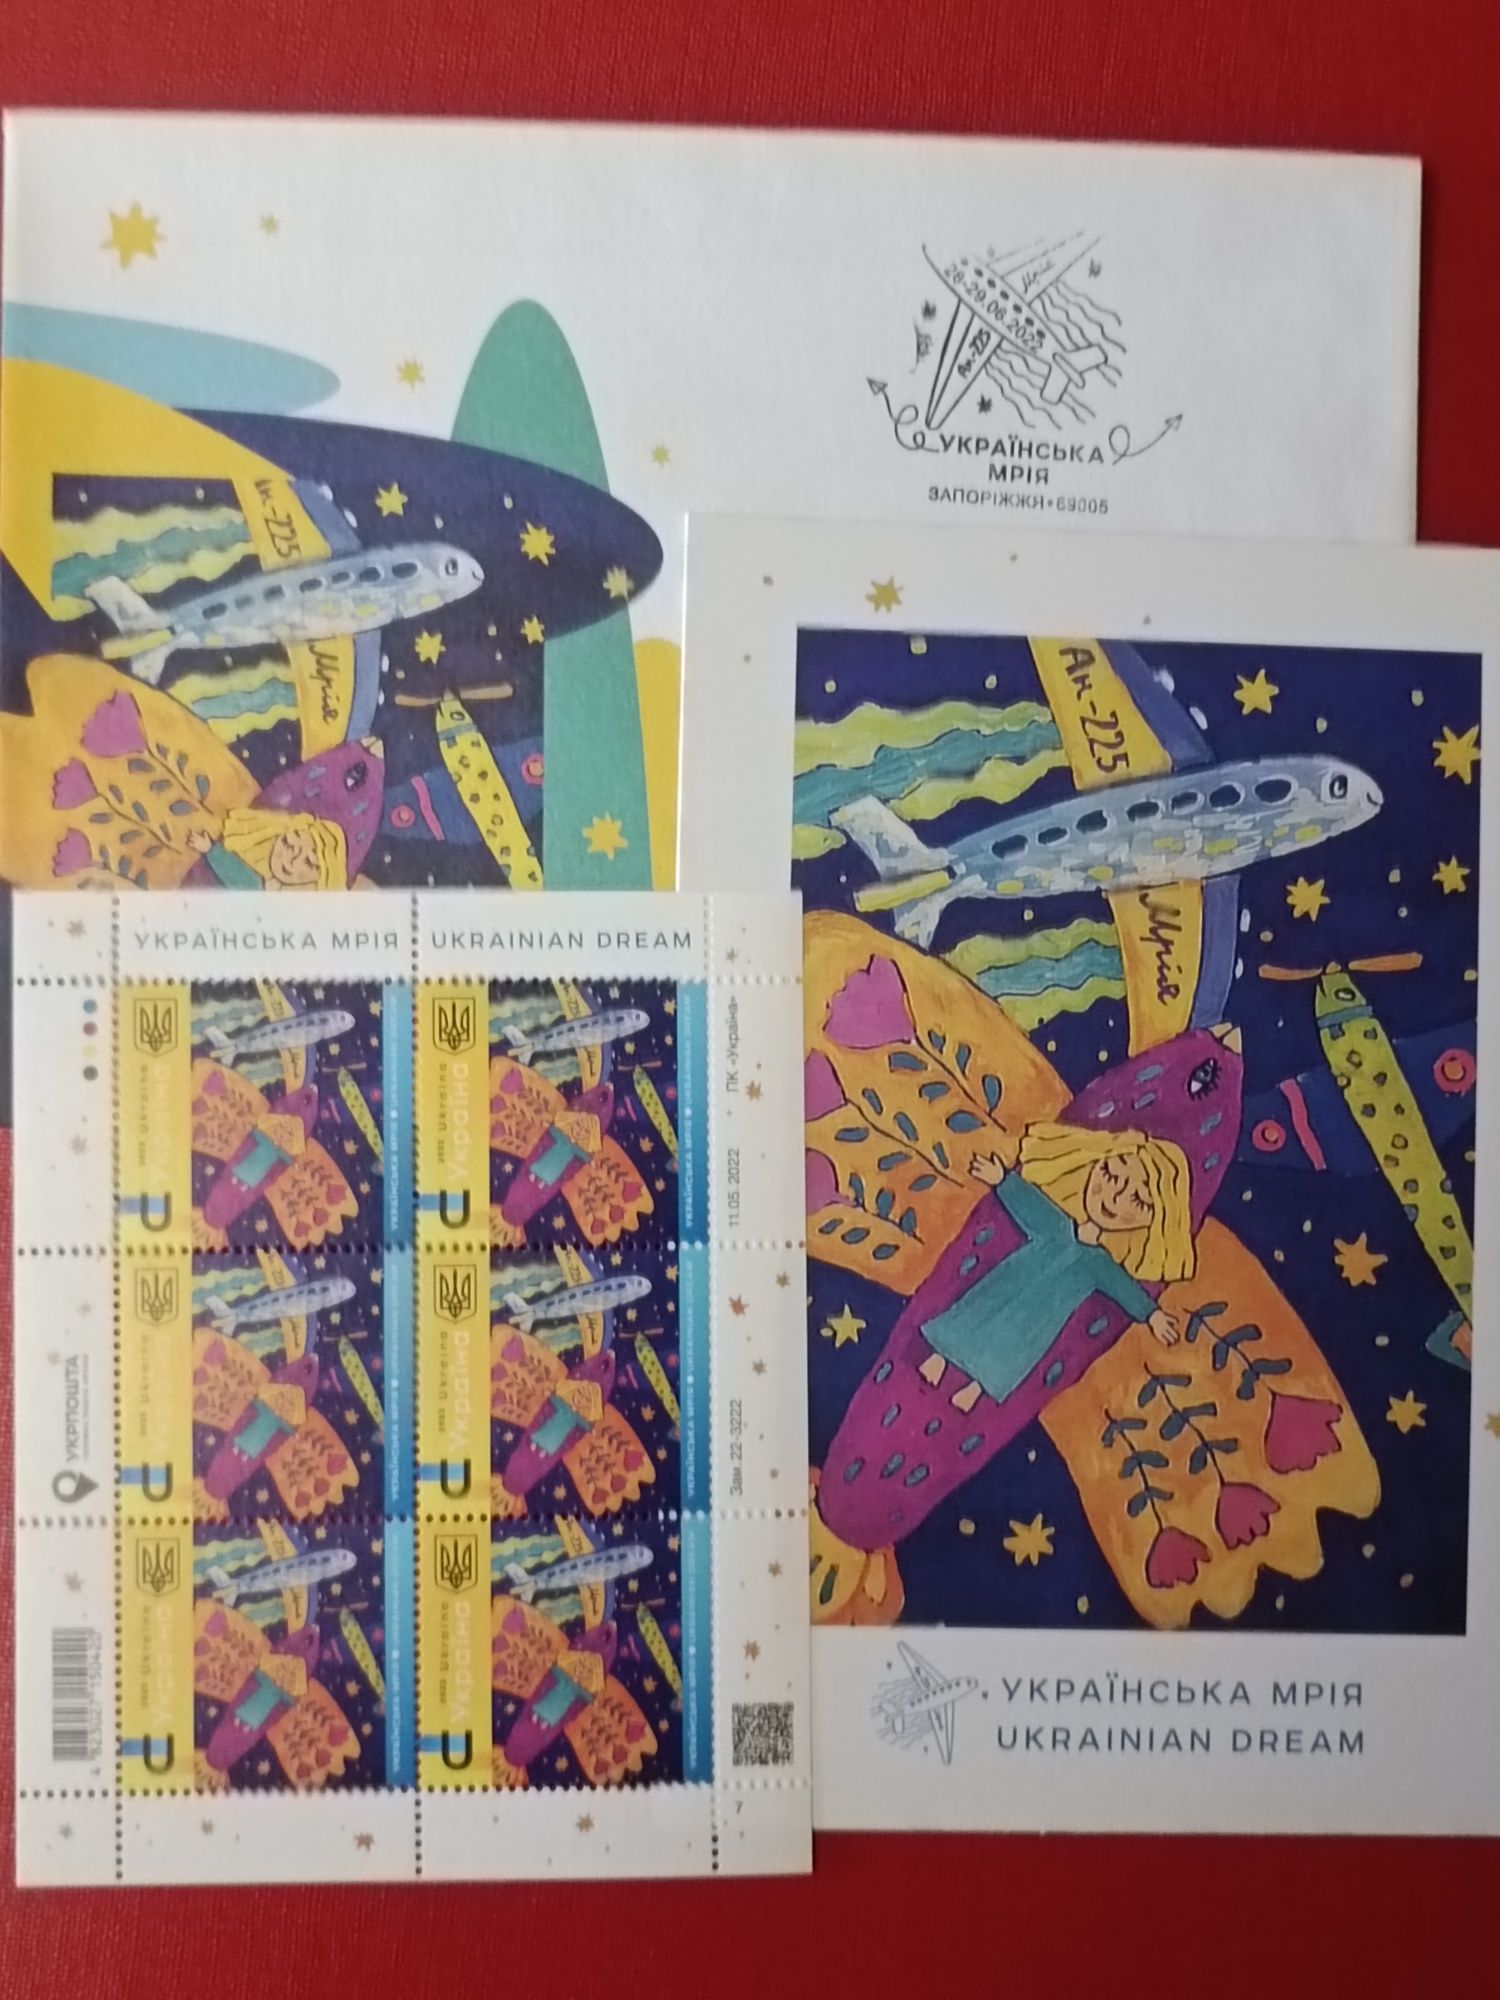 Набор марок Мрия (открытка, конверт, марки). Спец гашения.